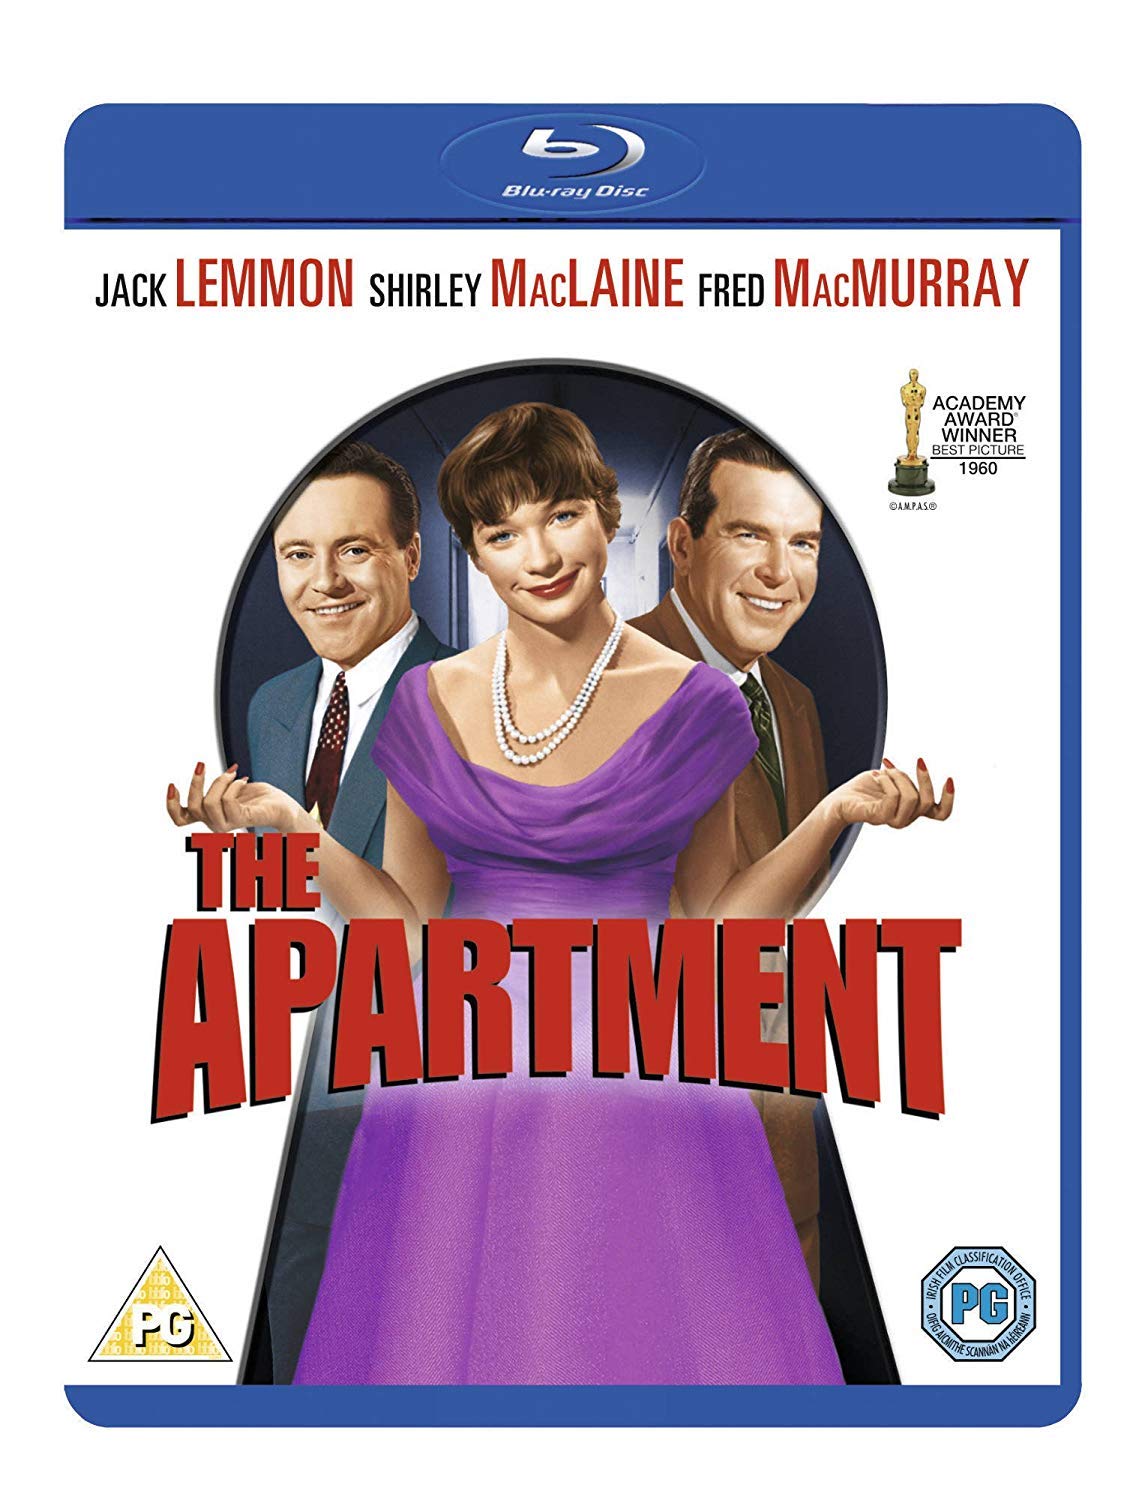 The Apartment (1960) starring Jack Lemmon, Shirley MacLaine, Fred MacMurray